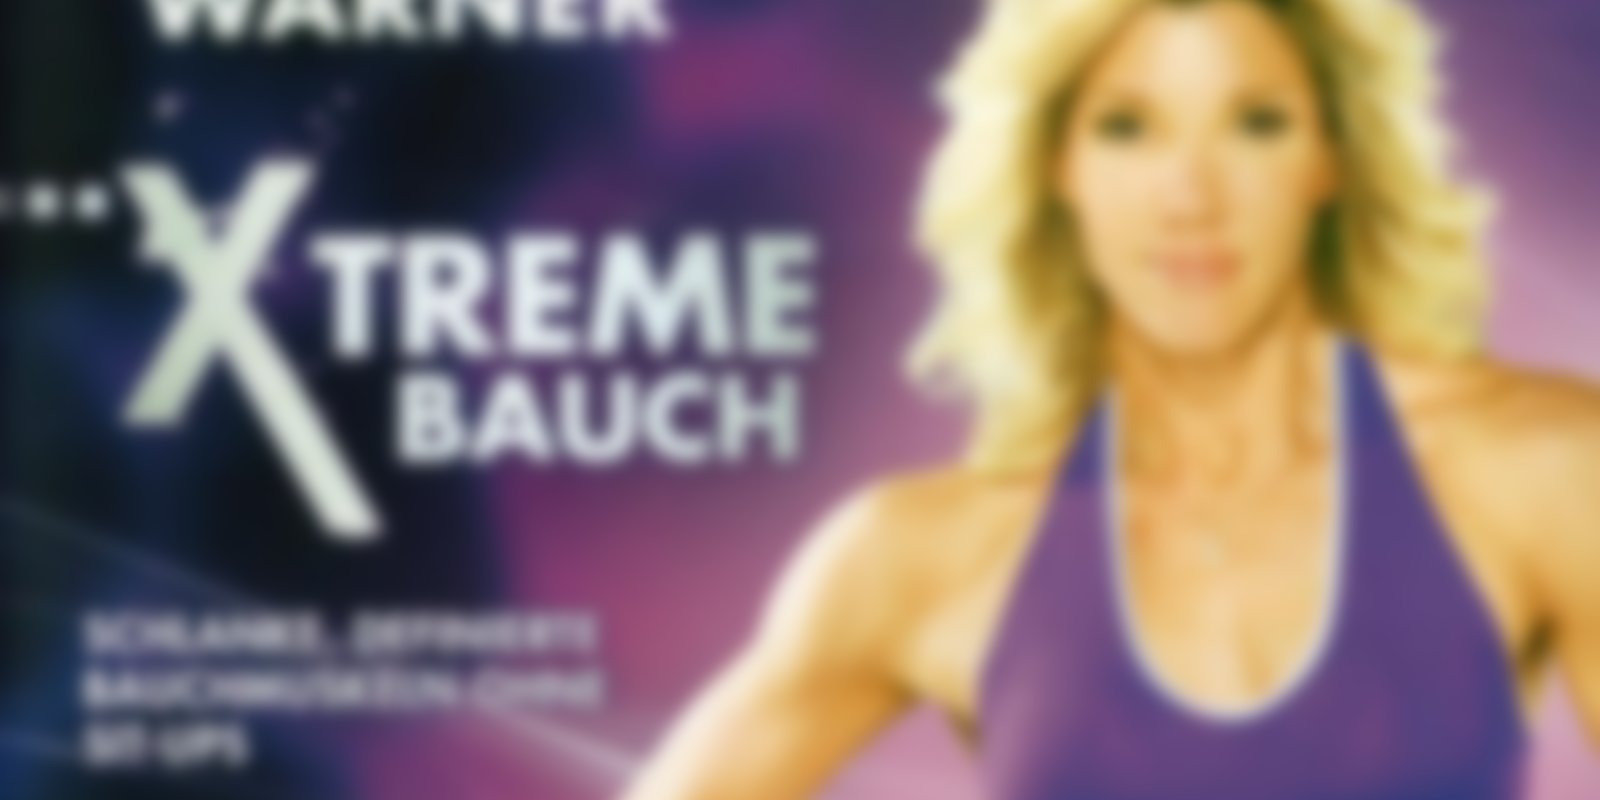 Personal Training mit Jackie Warner - Xtreme Bauch